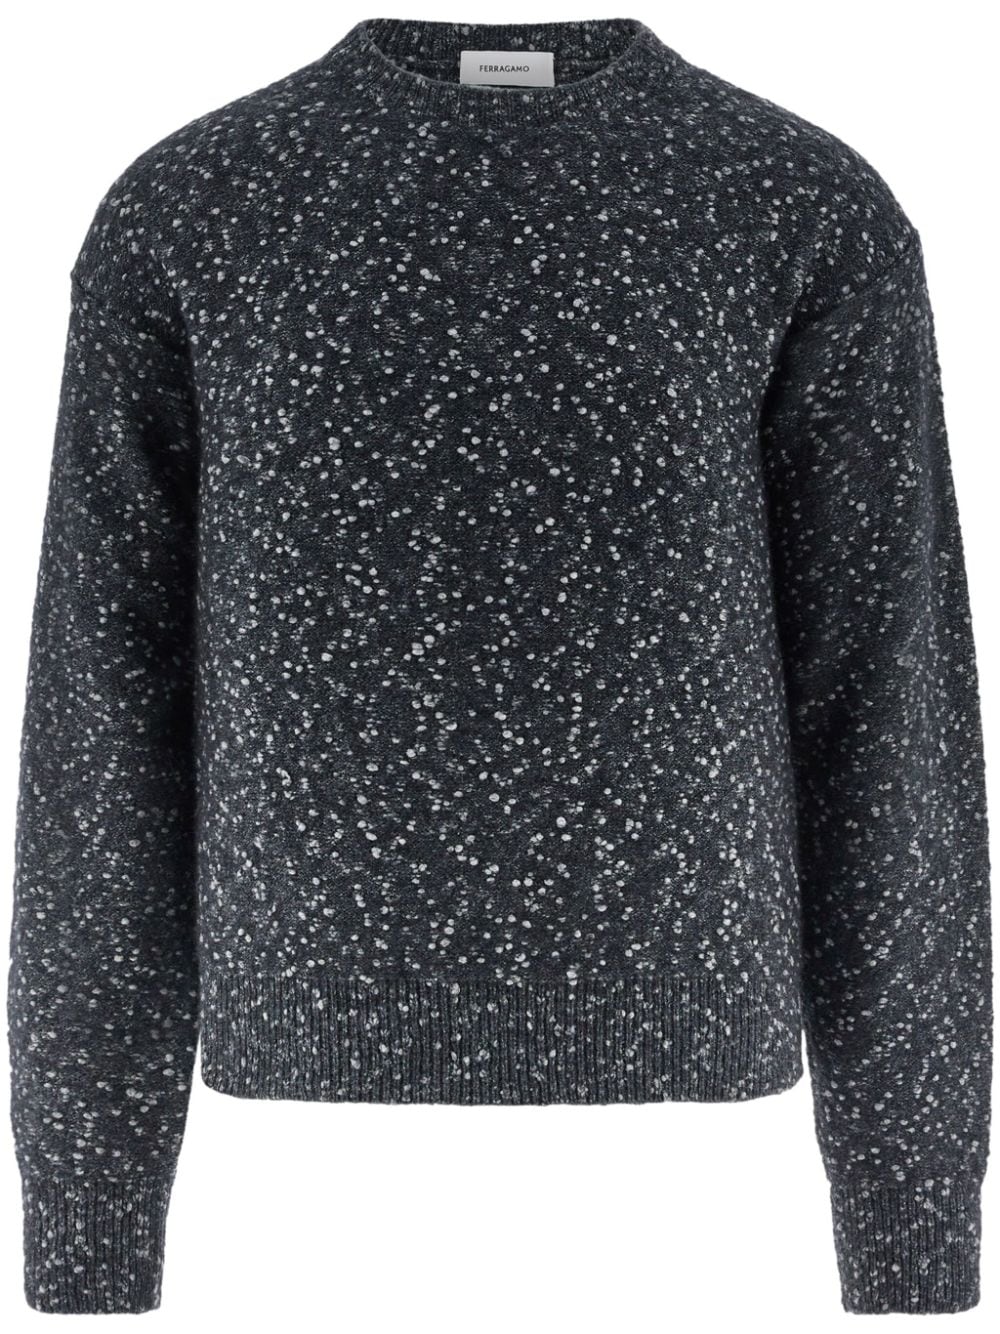 Ferragamo Charcoal Grey Boucle Sweater